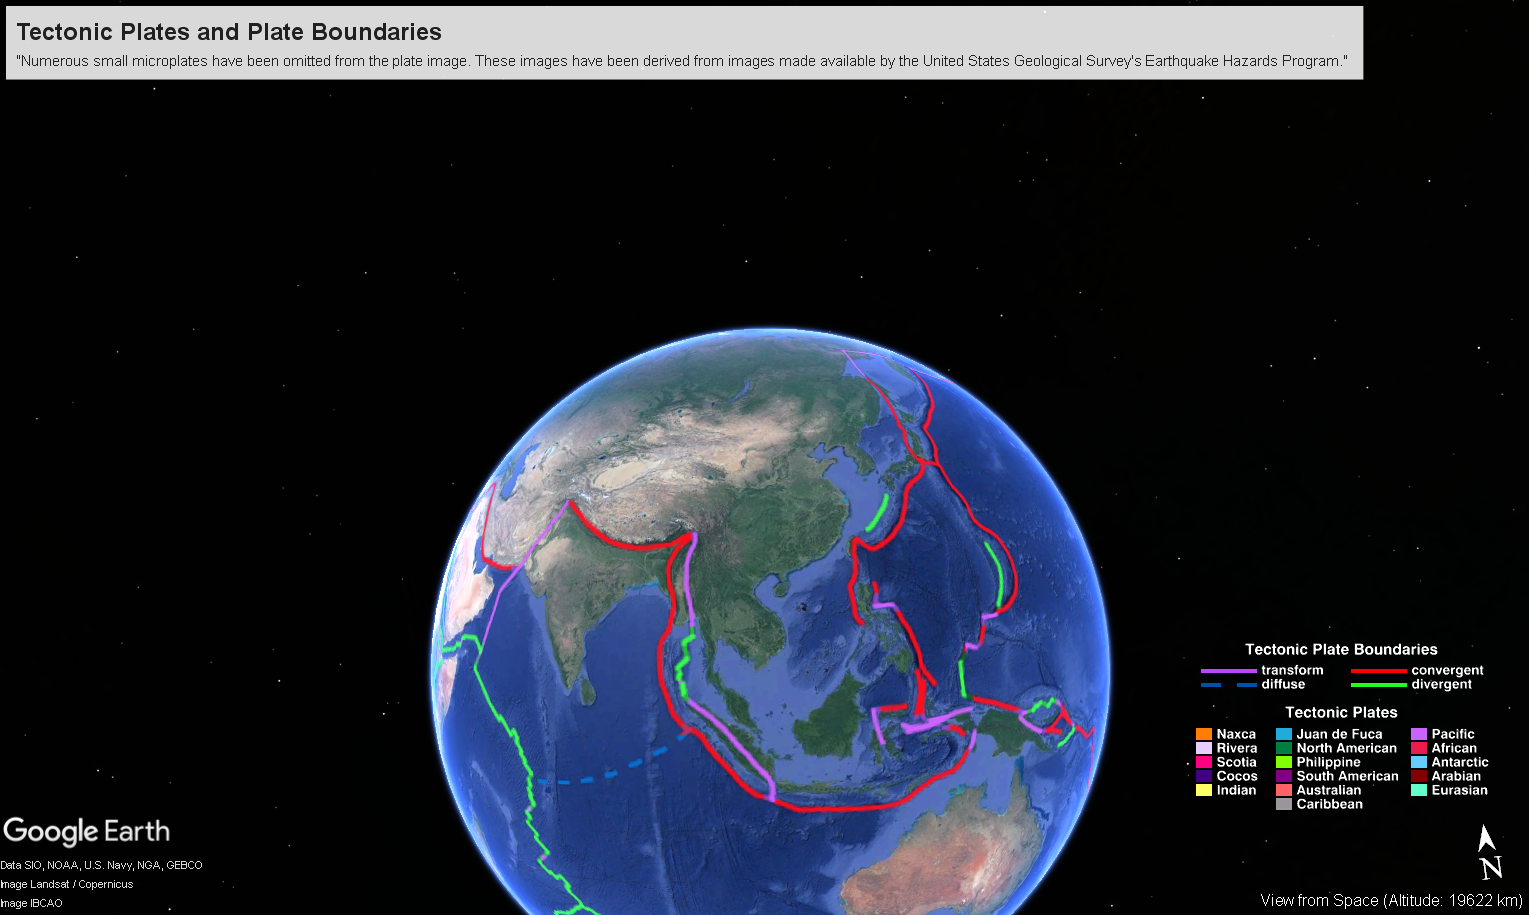 Tectonic Plates and Plate Boundaries using Google Earth